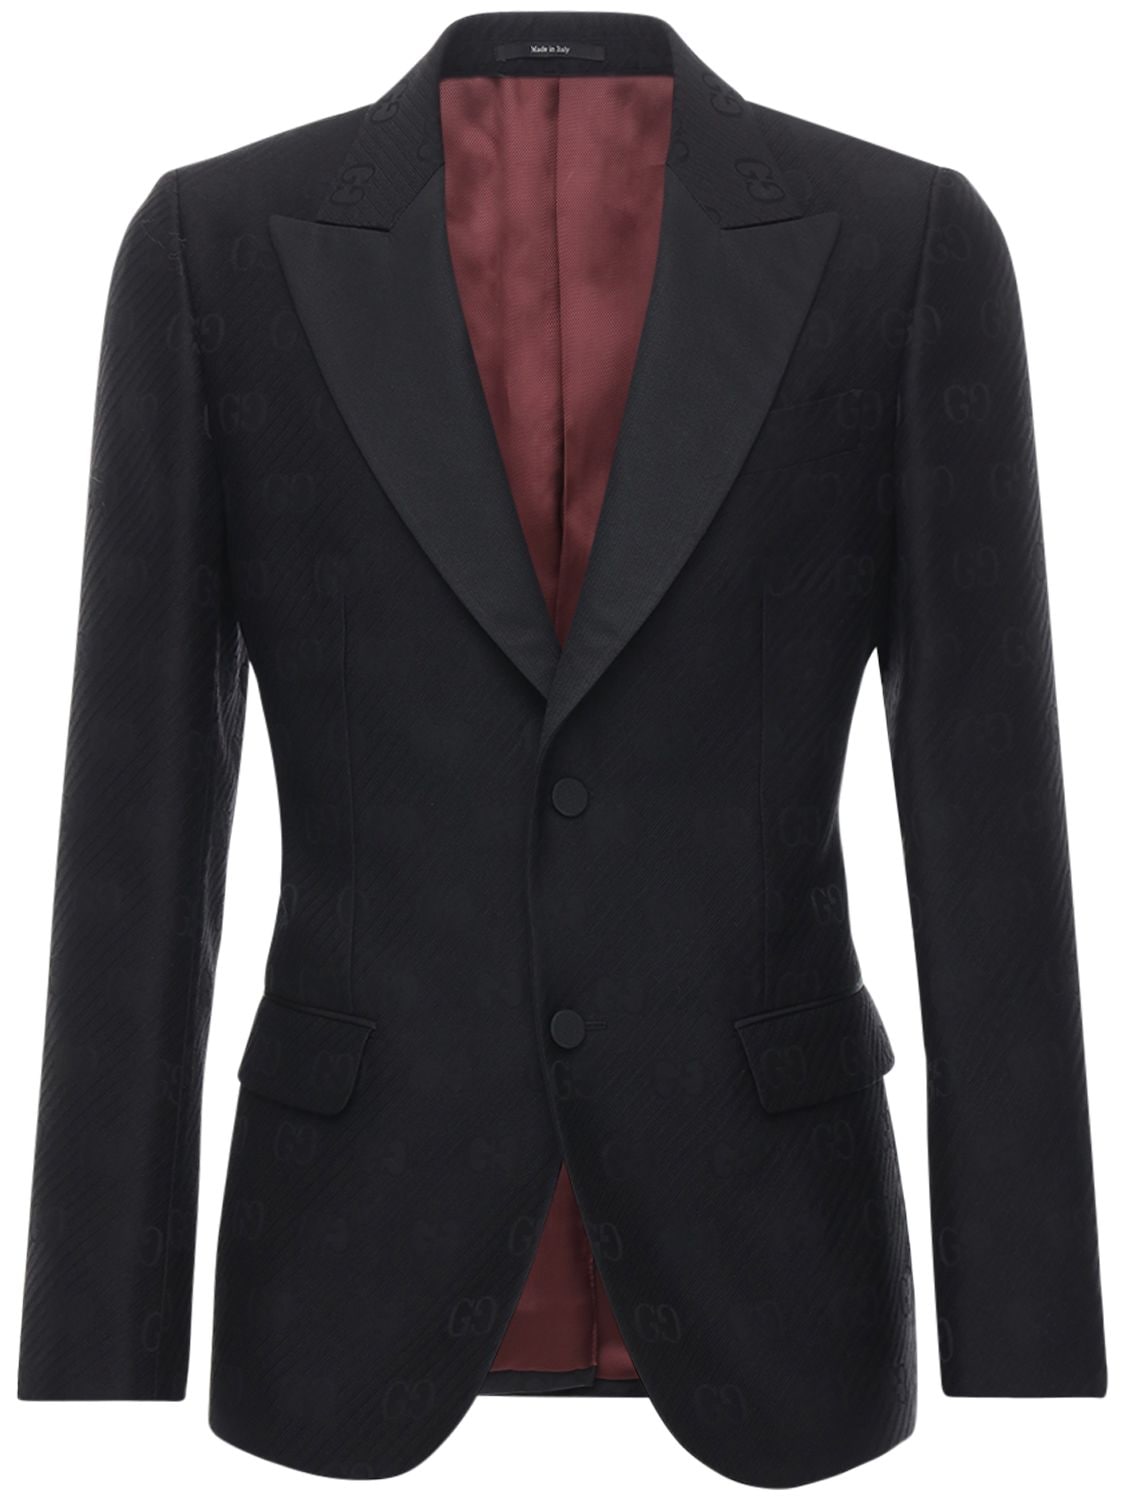 Gg Wool & Silk Jacquard Tuxedo Jacket